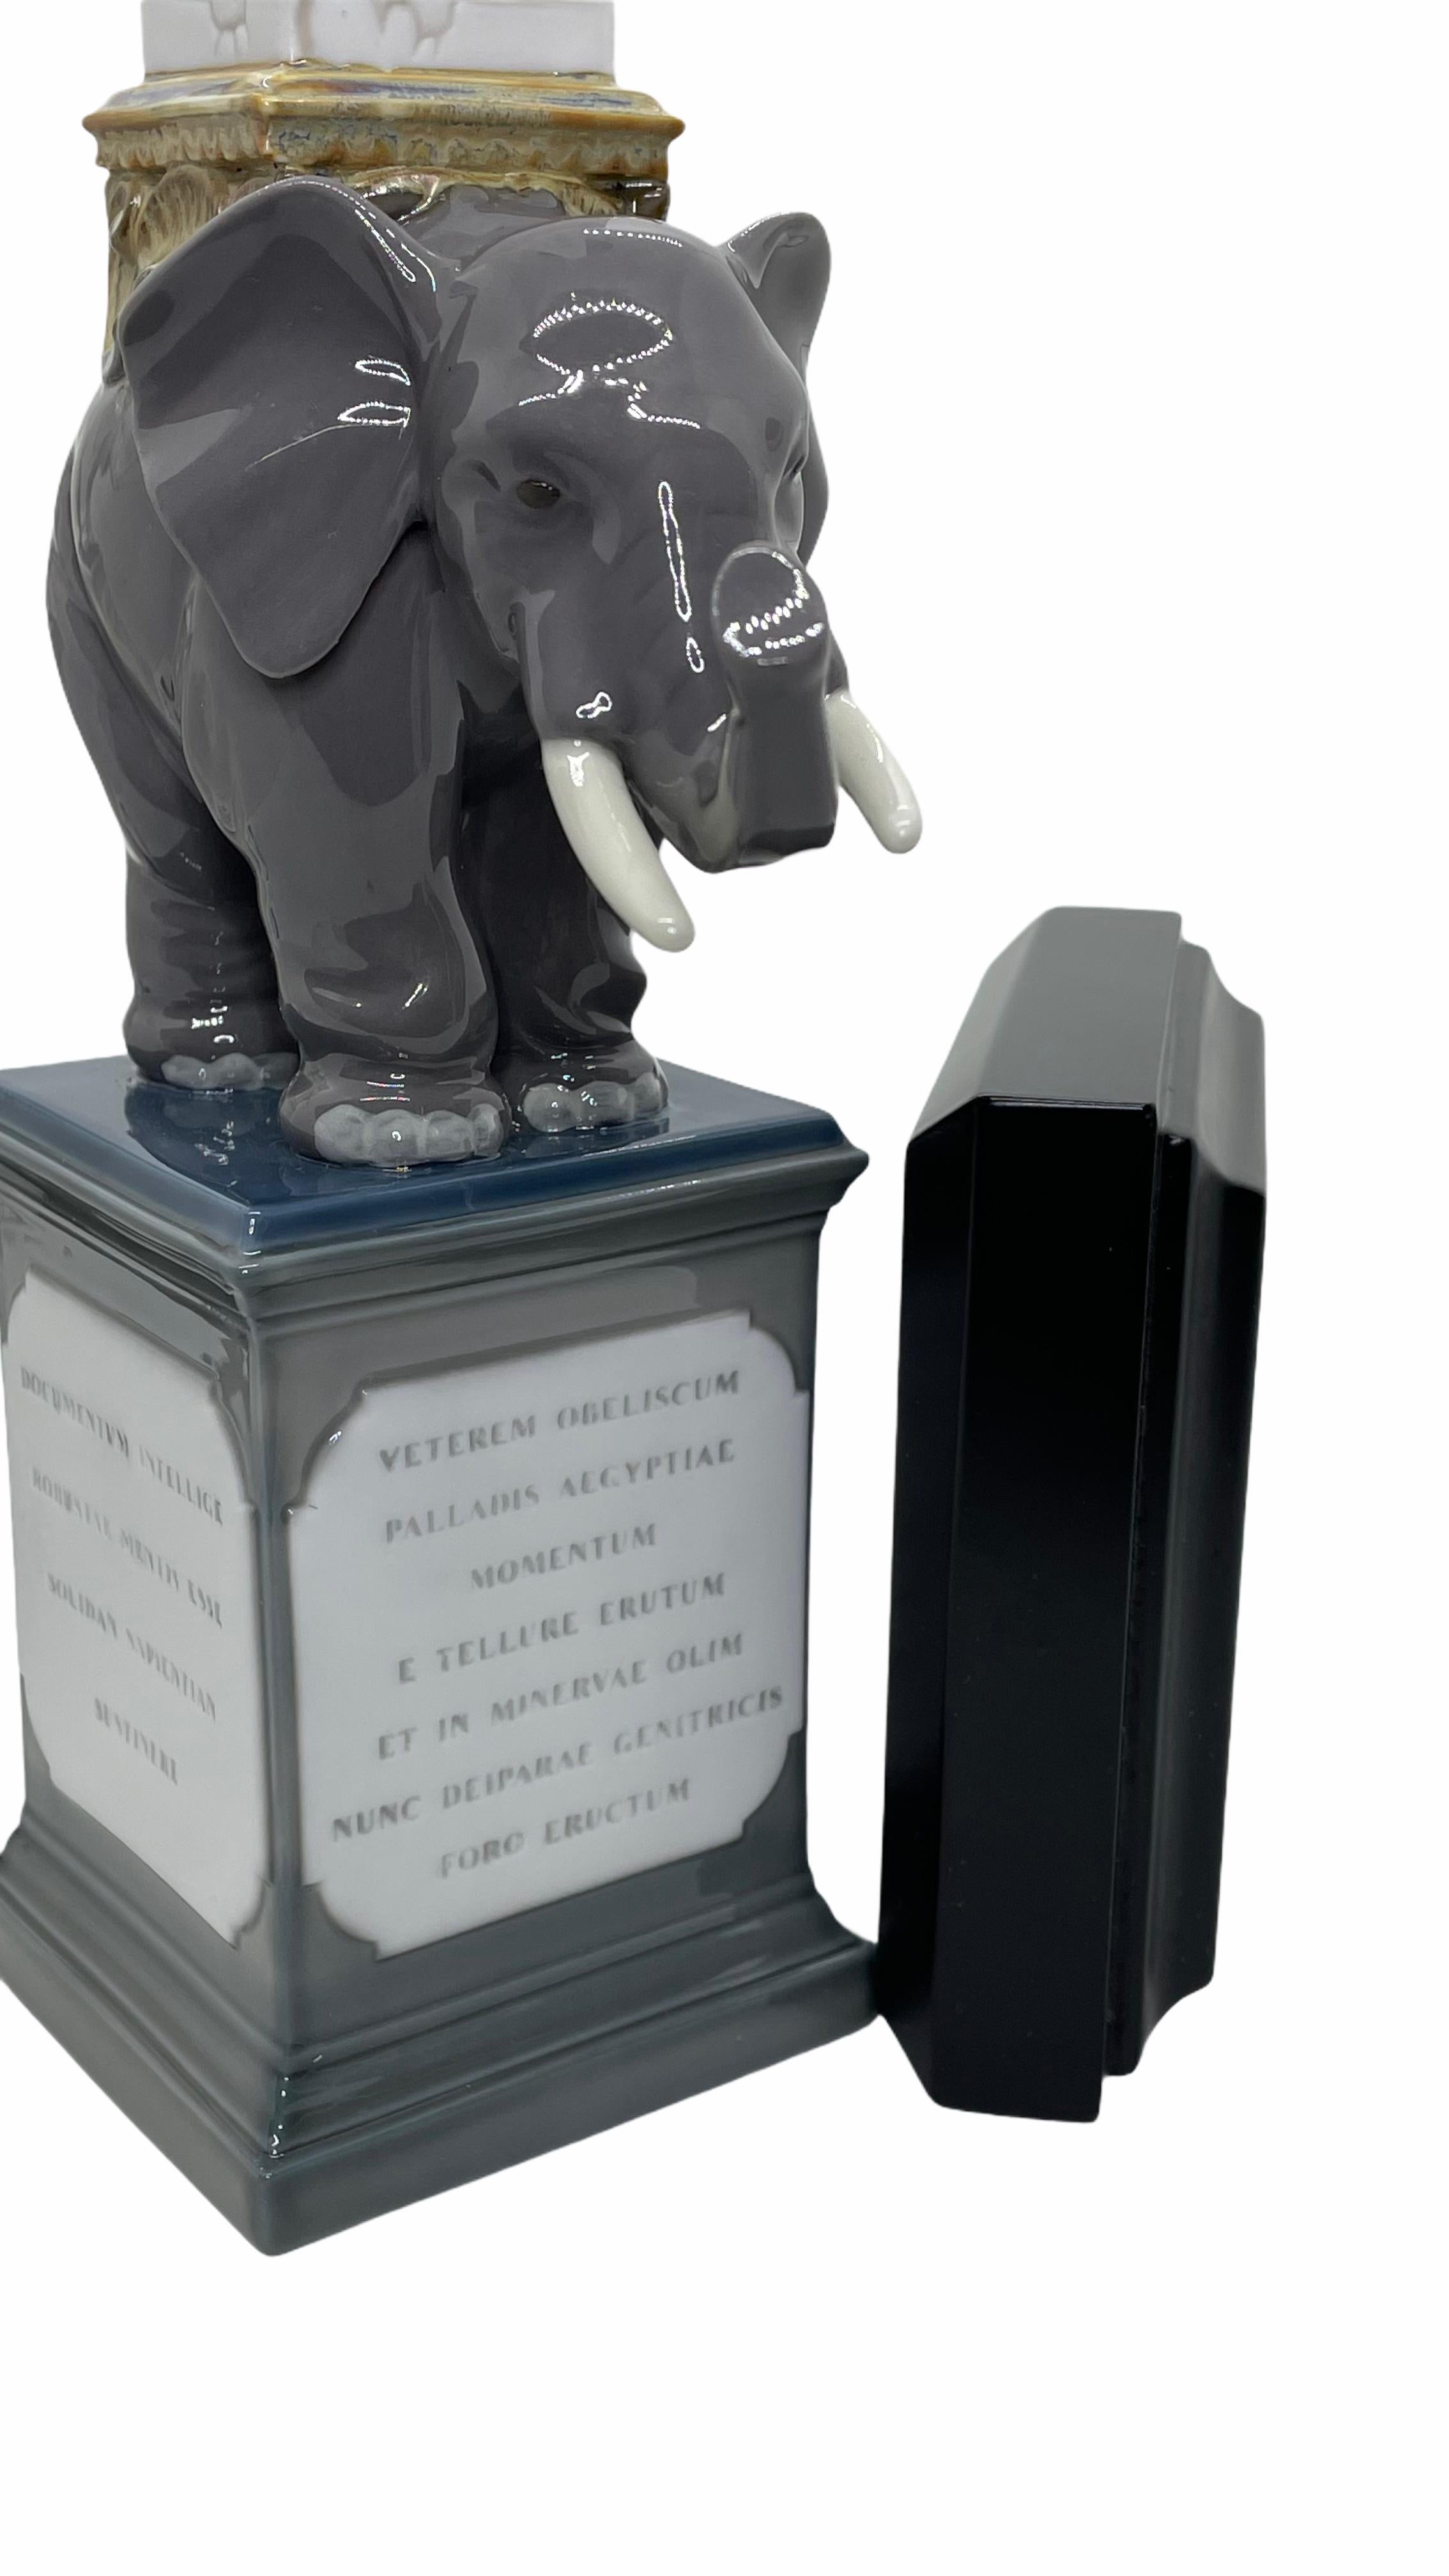 Lladro Pulcino Obelisk Porcelain Grey Elephant Figurine with Wooden Base, Spain 2